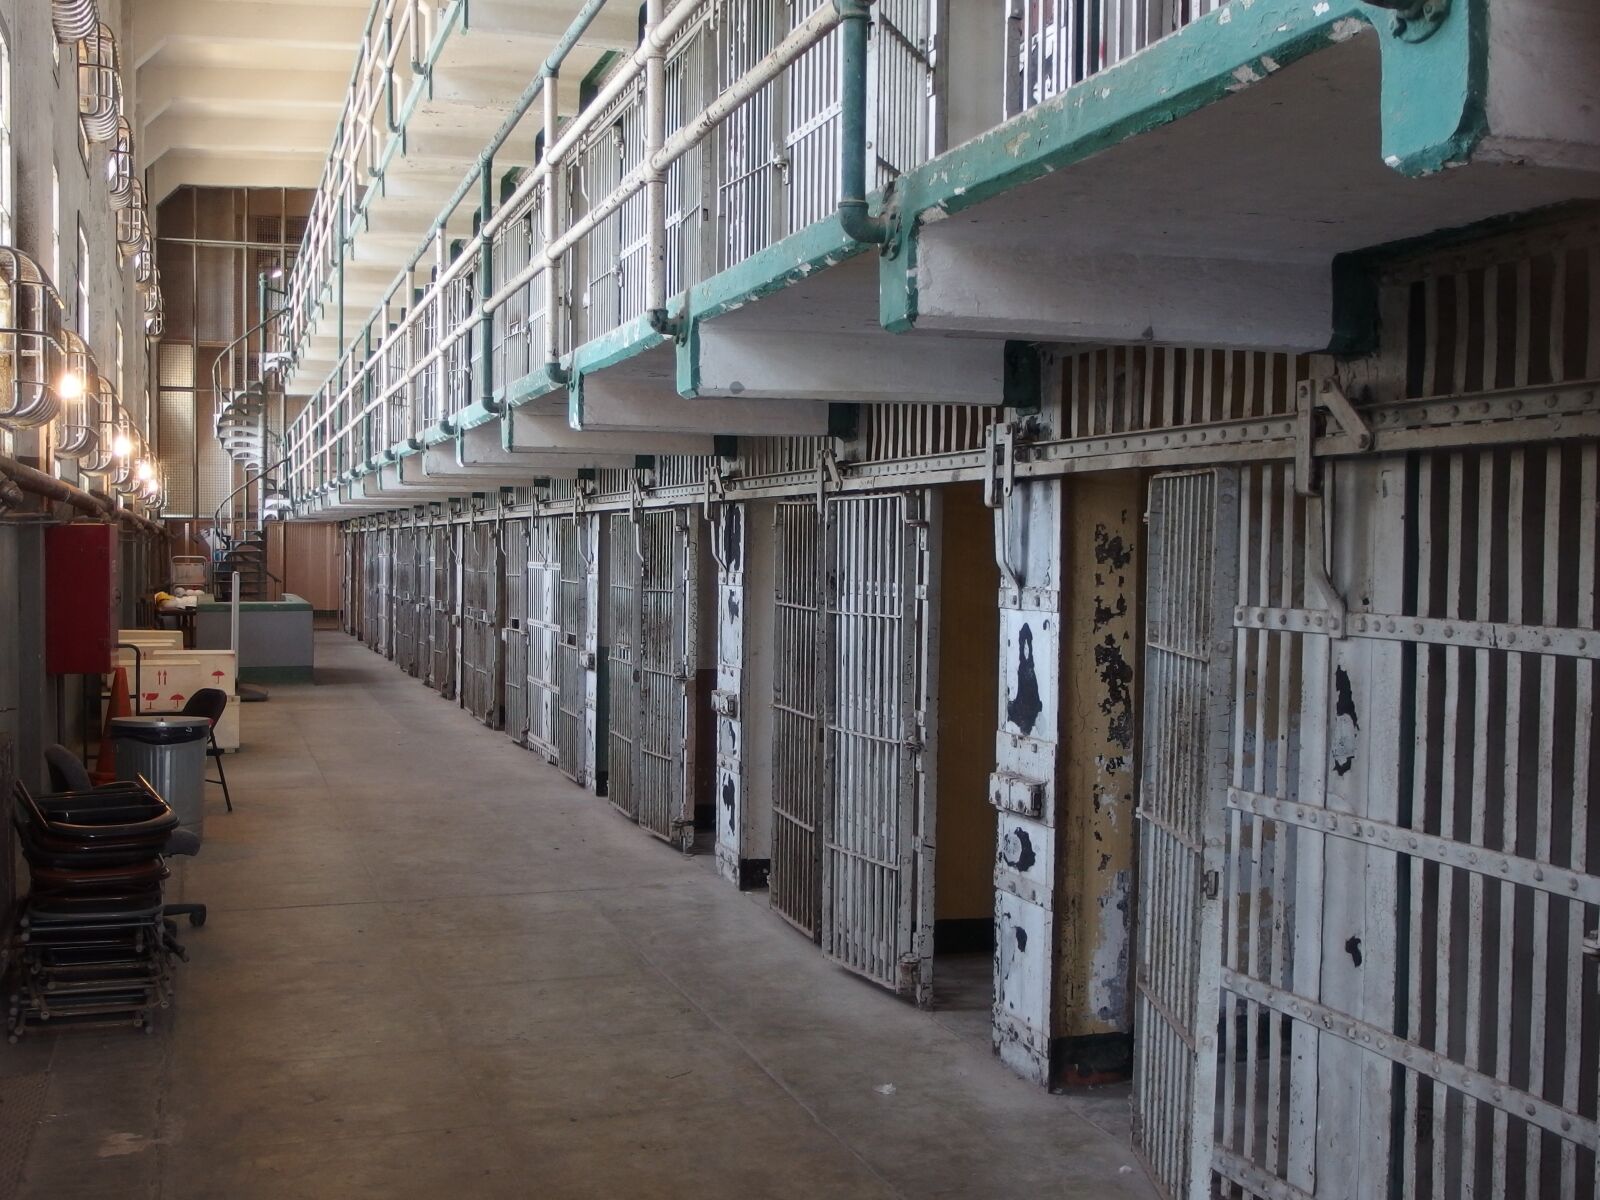 Olympus XZ-2 iHS sample photo. Alcatraz, prison, in prison photography